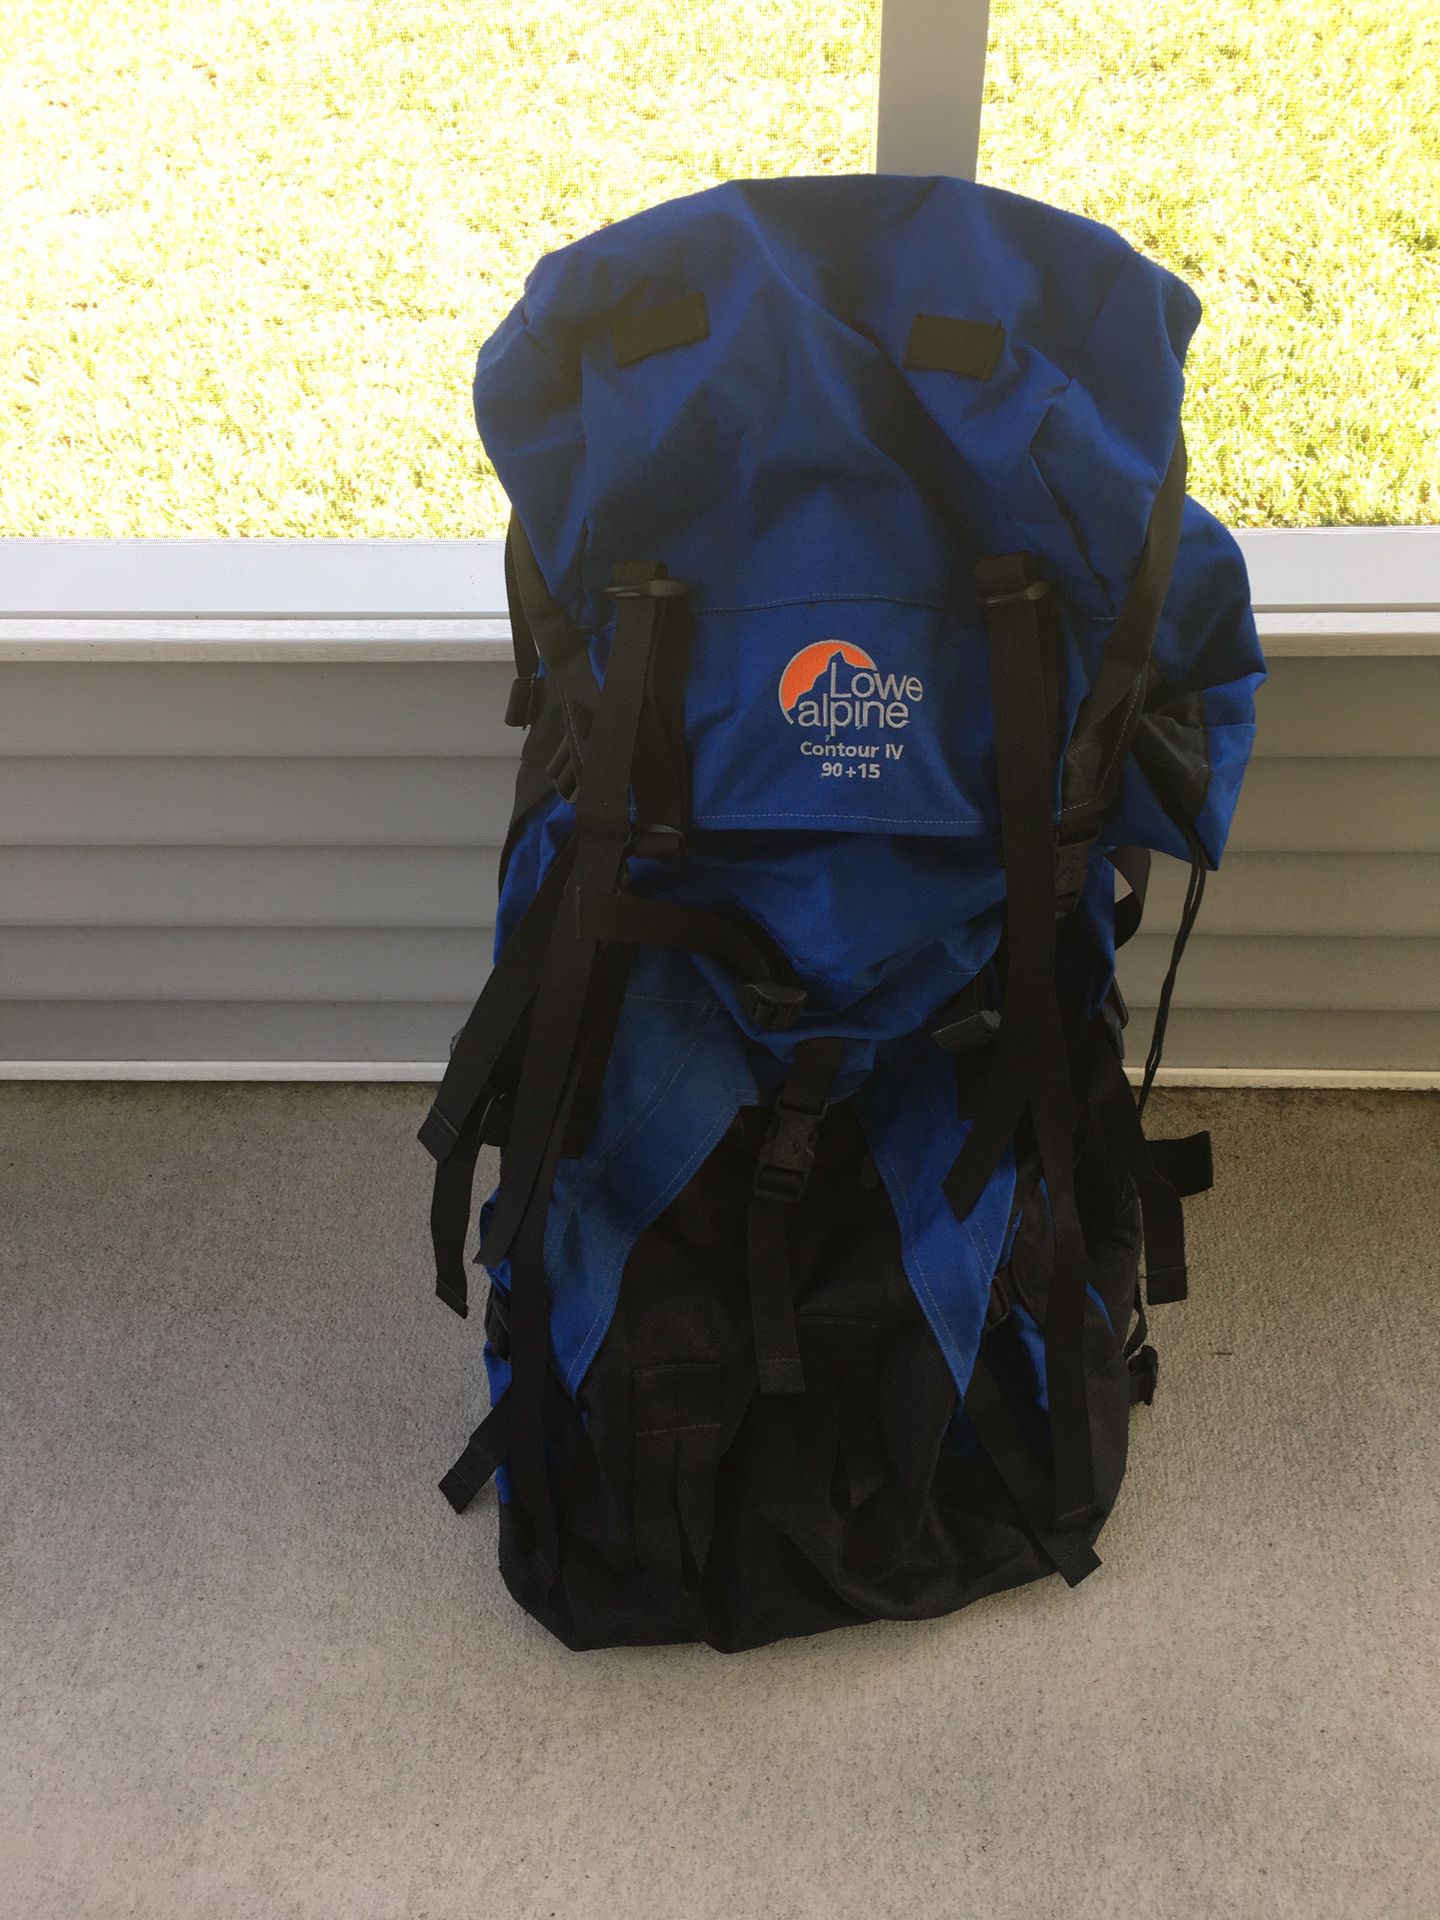 Lowe Alpine Internal Frame Backpack